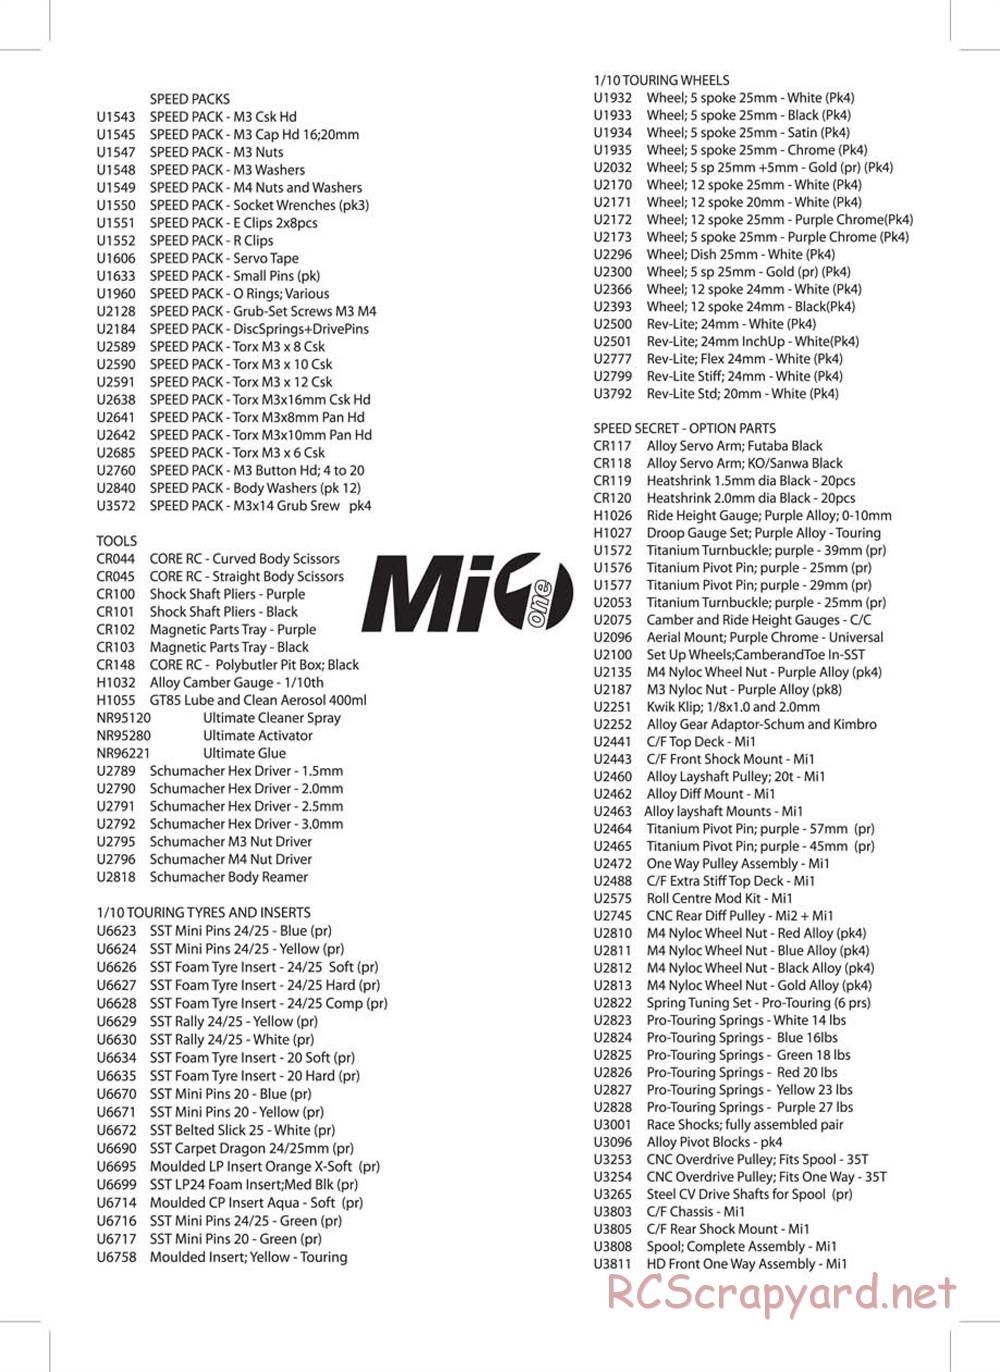 Schumacher - Mi1 - Manual - Page 32